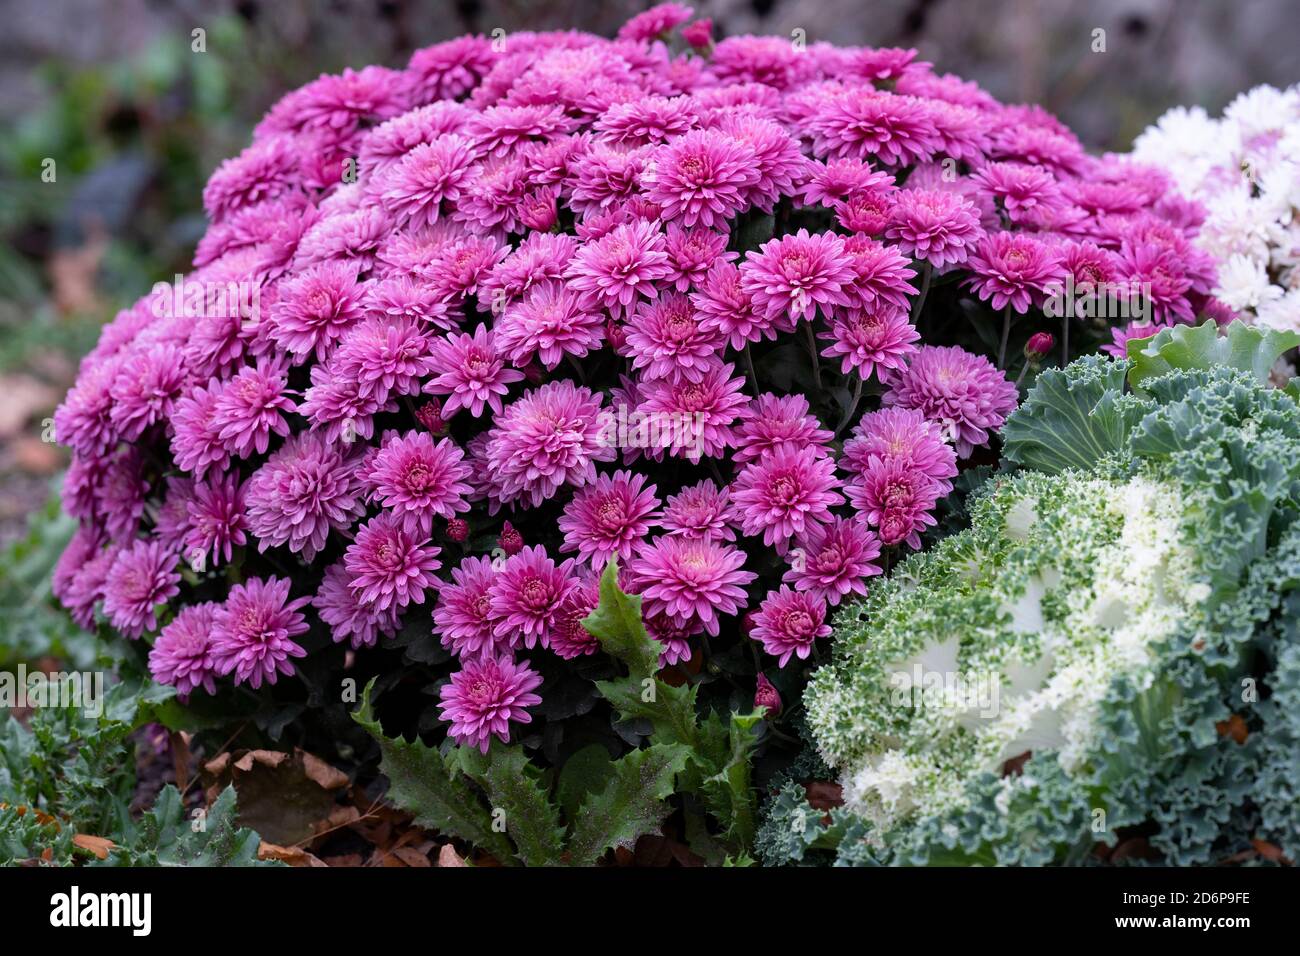 Pink Chyrsanthemum and White Ornamental Flowering Kale Growing in garden, Autumn Flowers, Plants, Perennials v Stock Photo